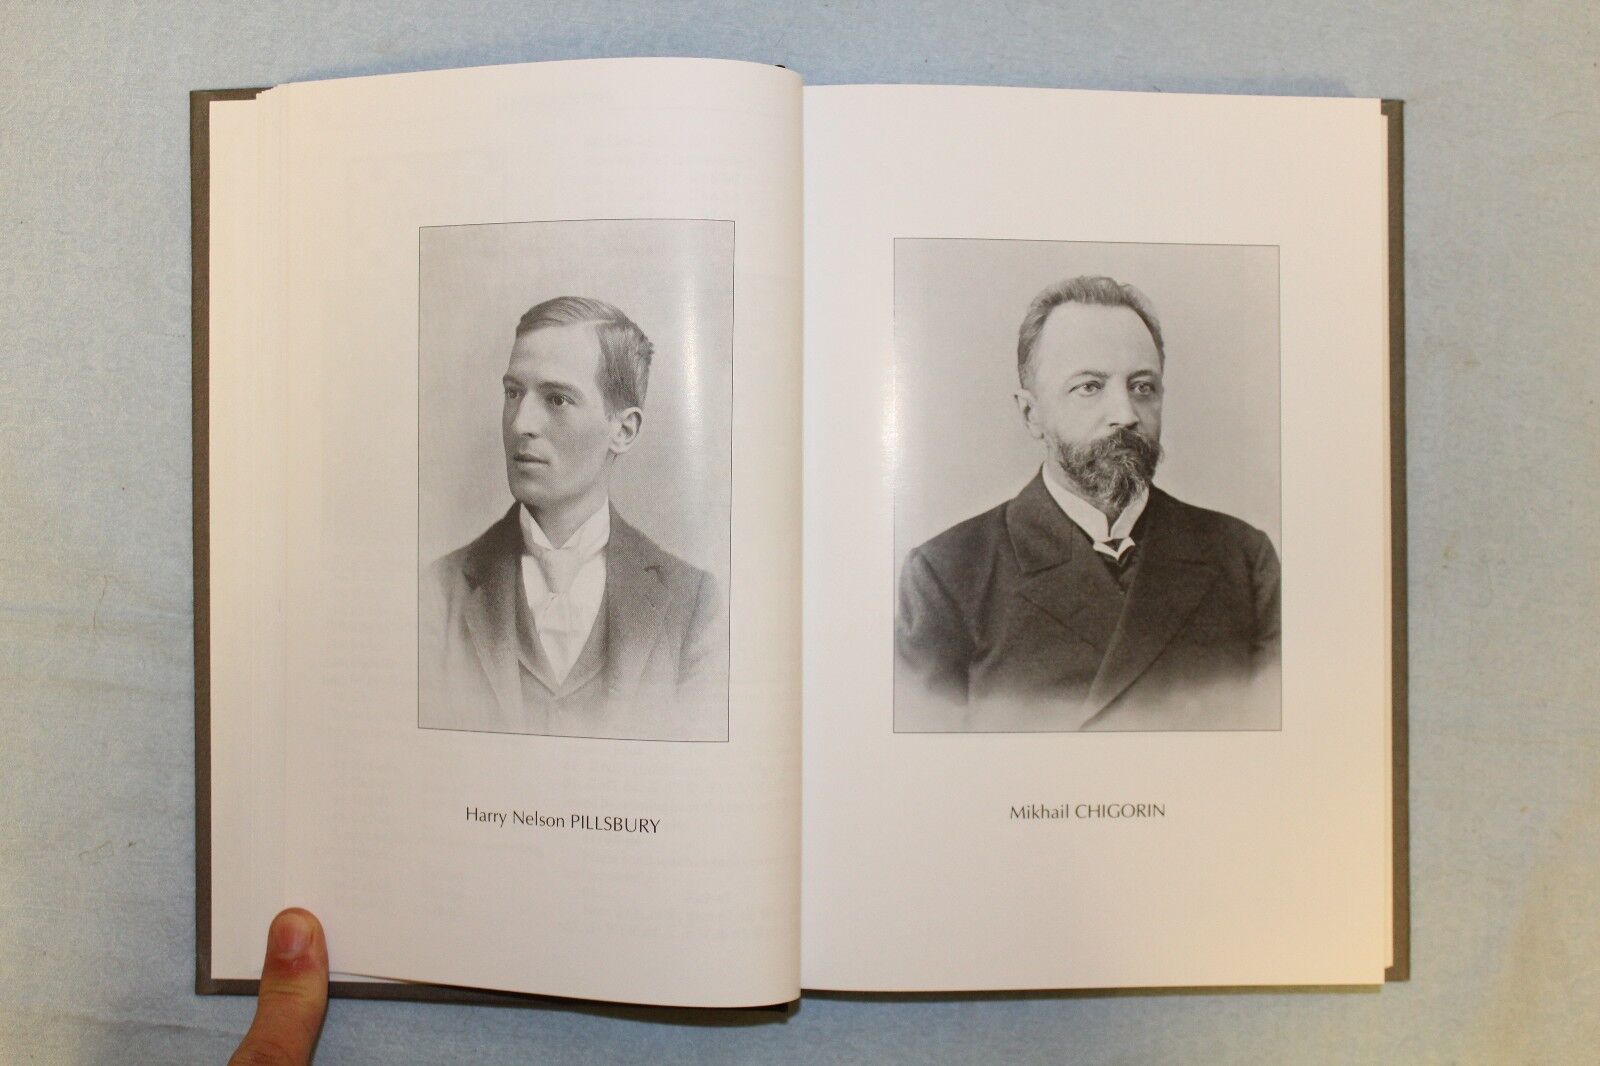 11069.Chess Book: Emil Schallopp. Hastings 1895 Chess Tournament. 2017. Gift edition